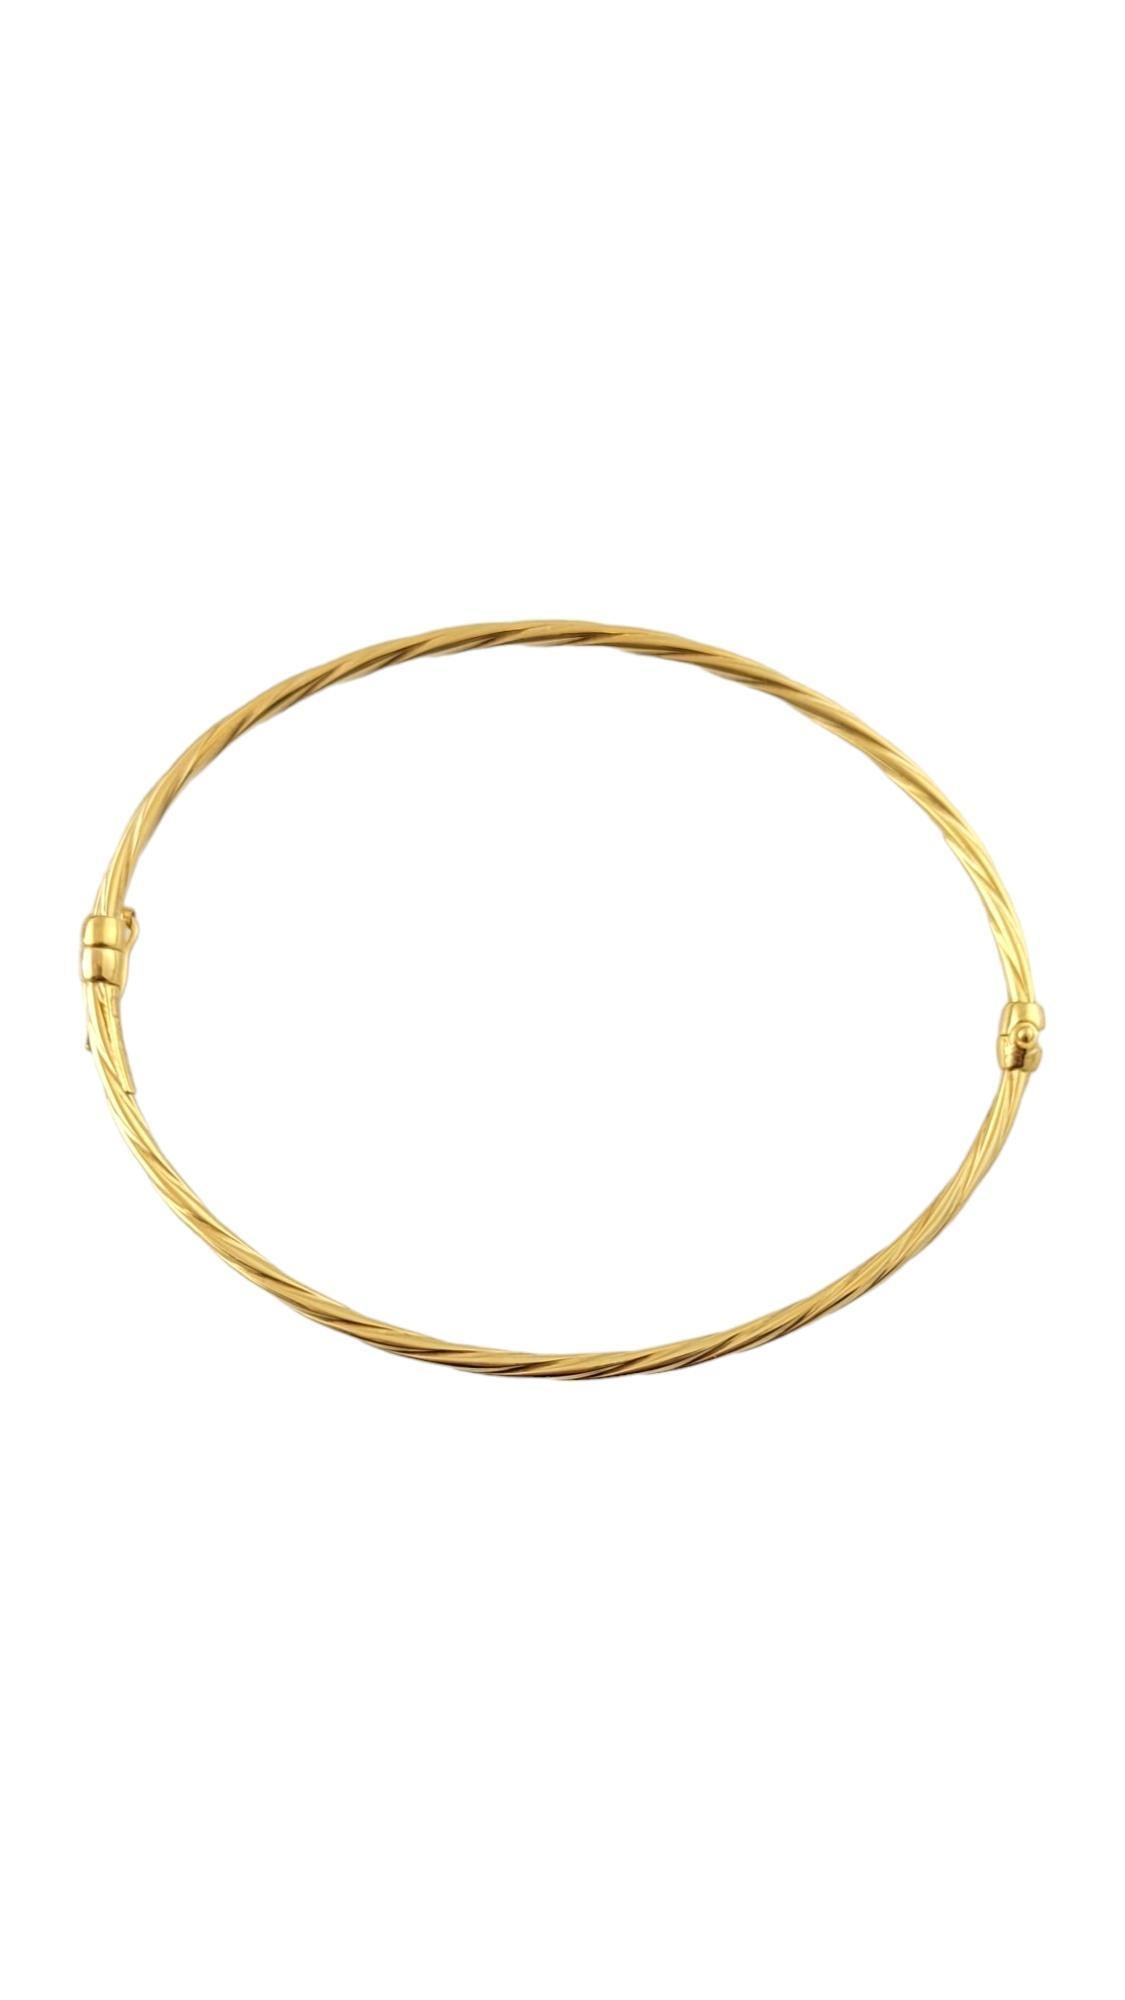 Women's 18K Yellow Gold Twisted Bangle Bracelet #17336